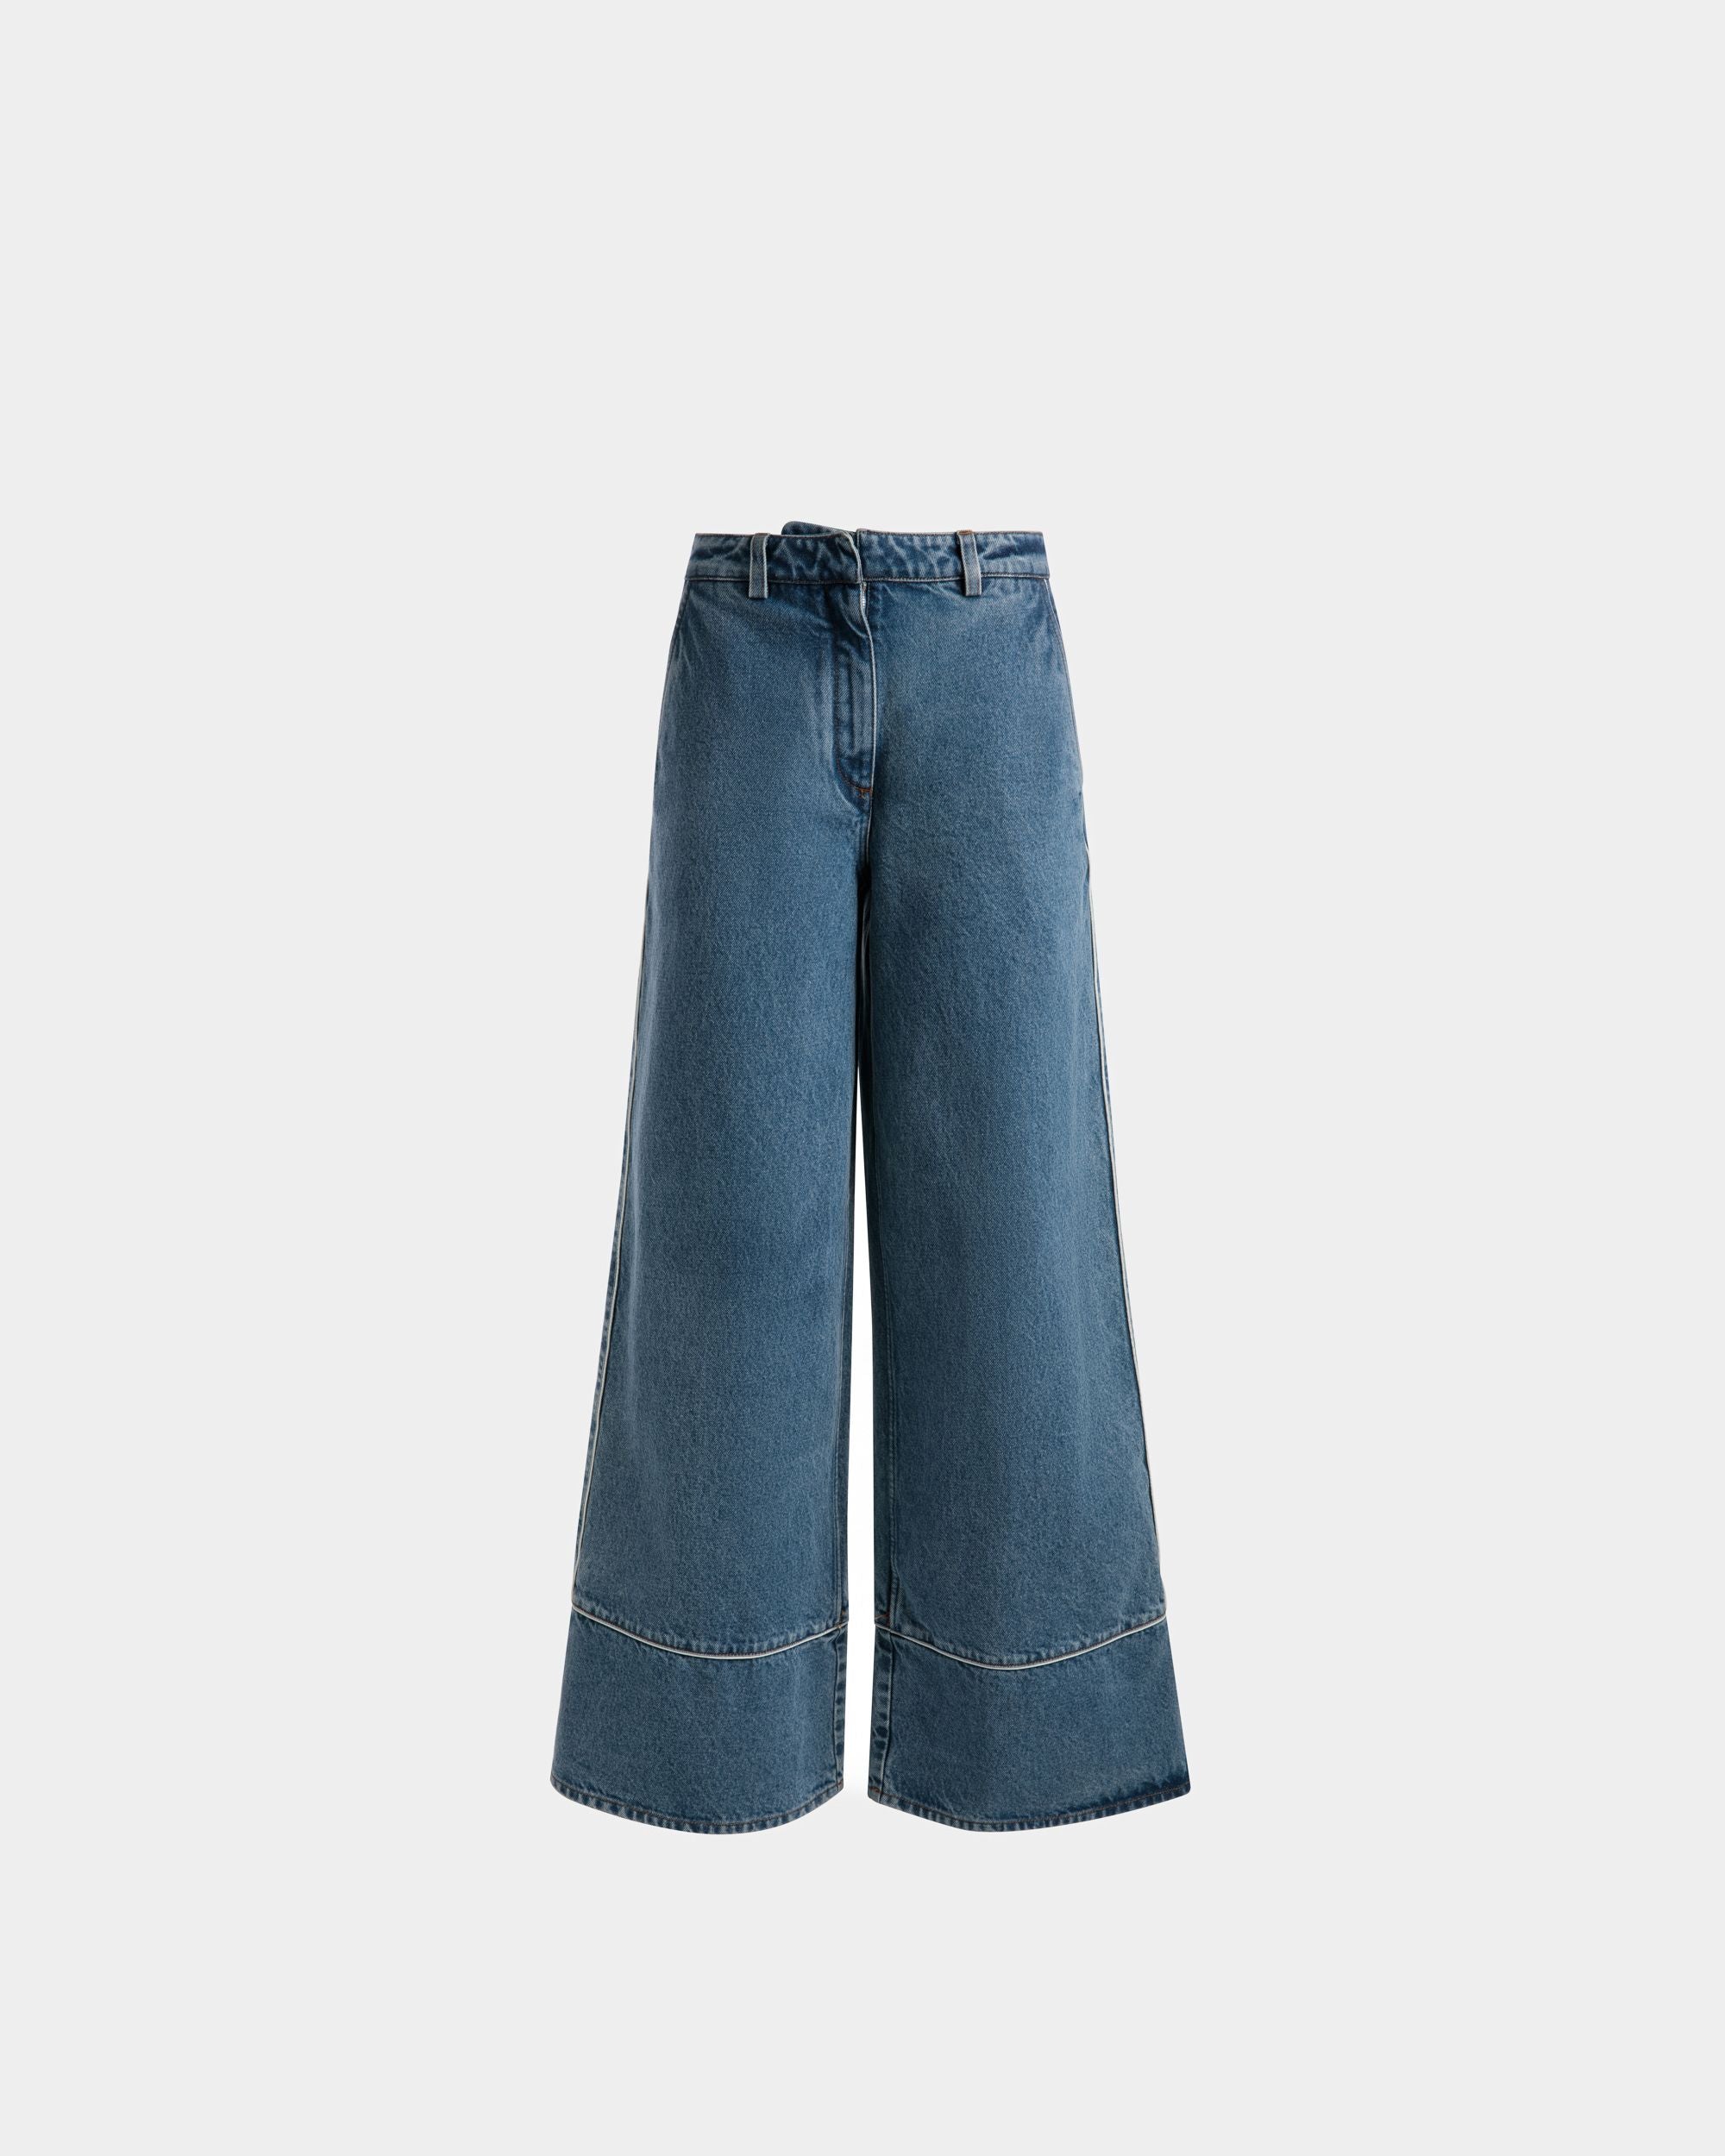 Denim Pants | Women's Pants | Light Blue Cotton | Bally | Still Life Front